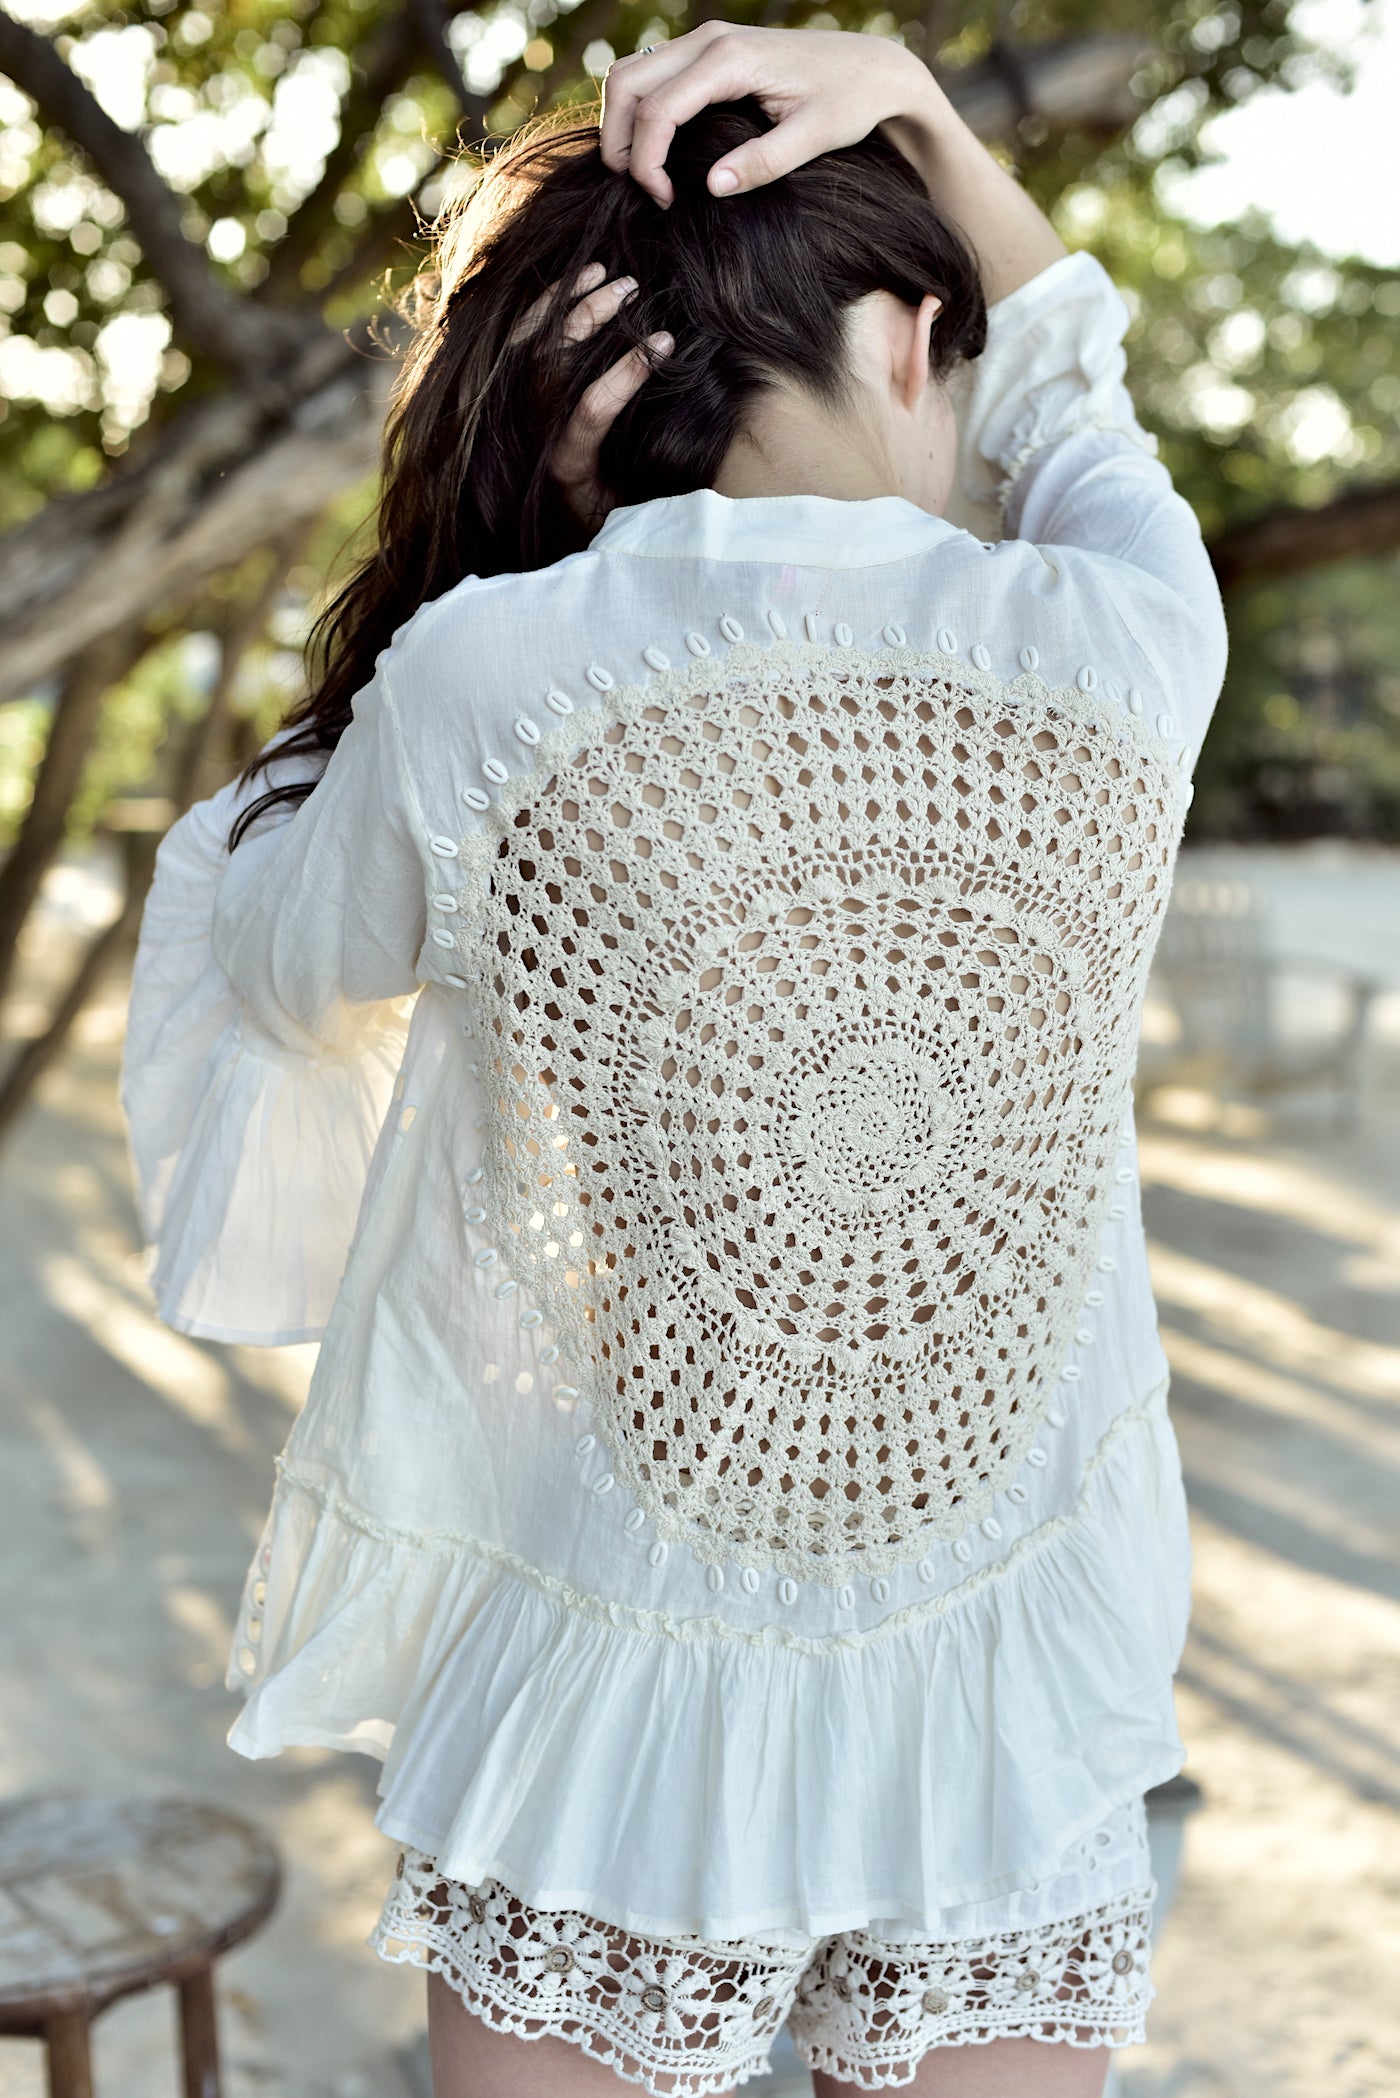 Boho Medallion Bag - I Like Crochet